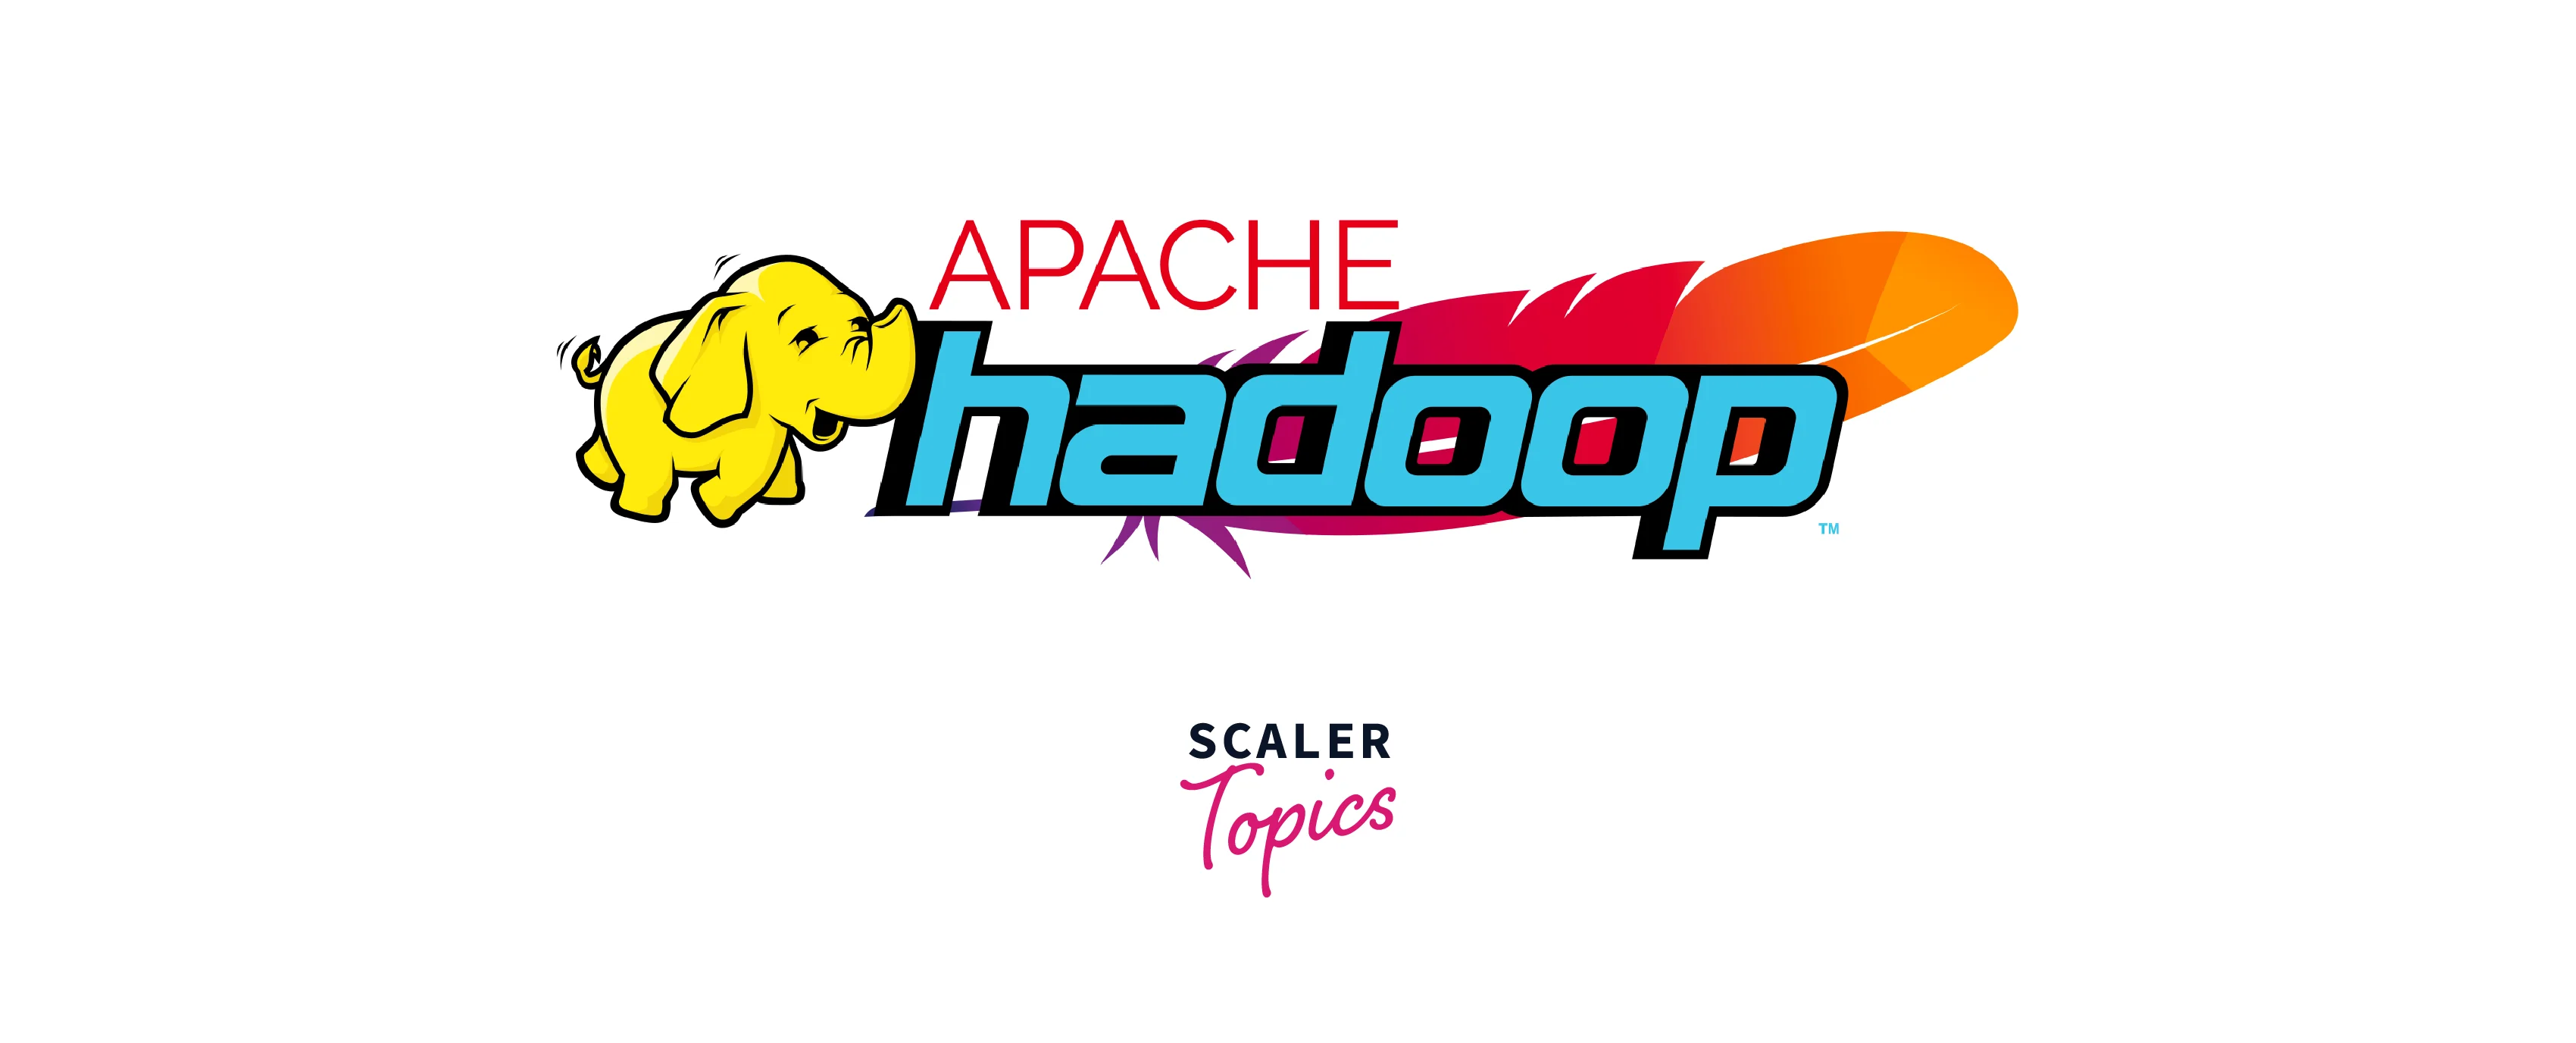 big data analytics tool apache hadoop